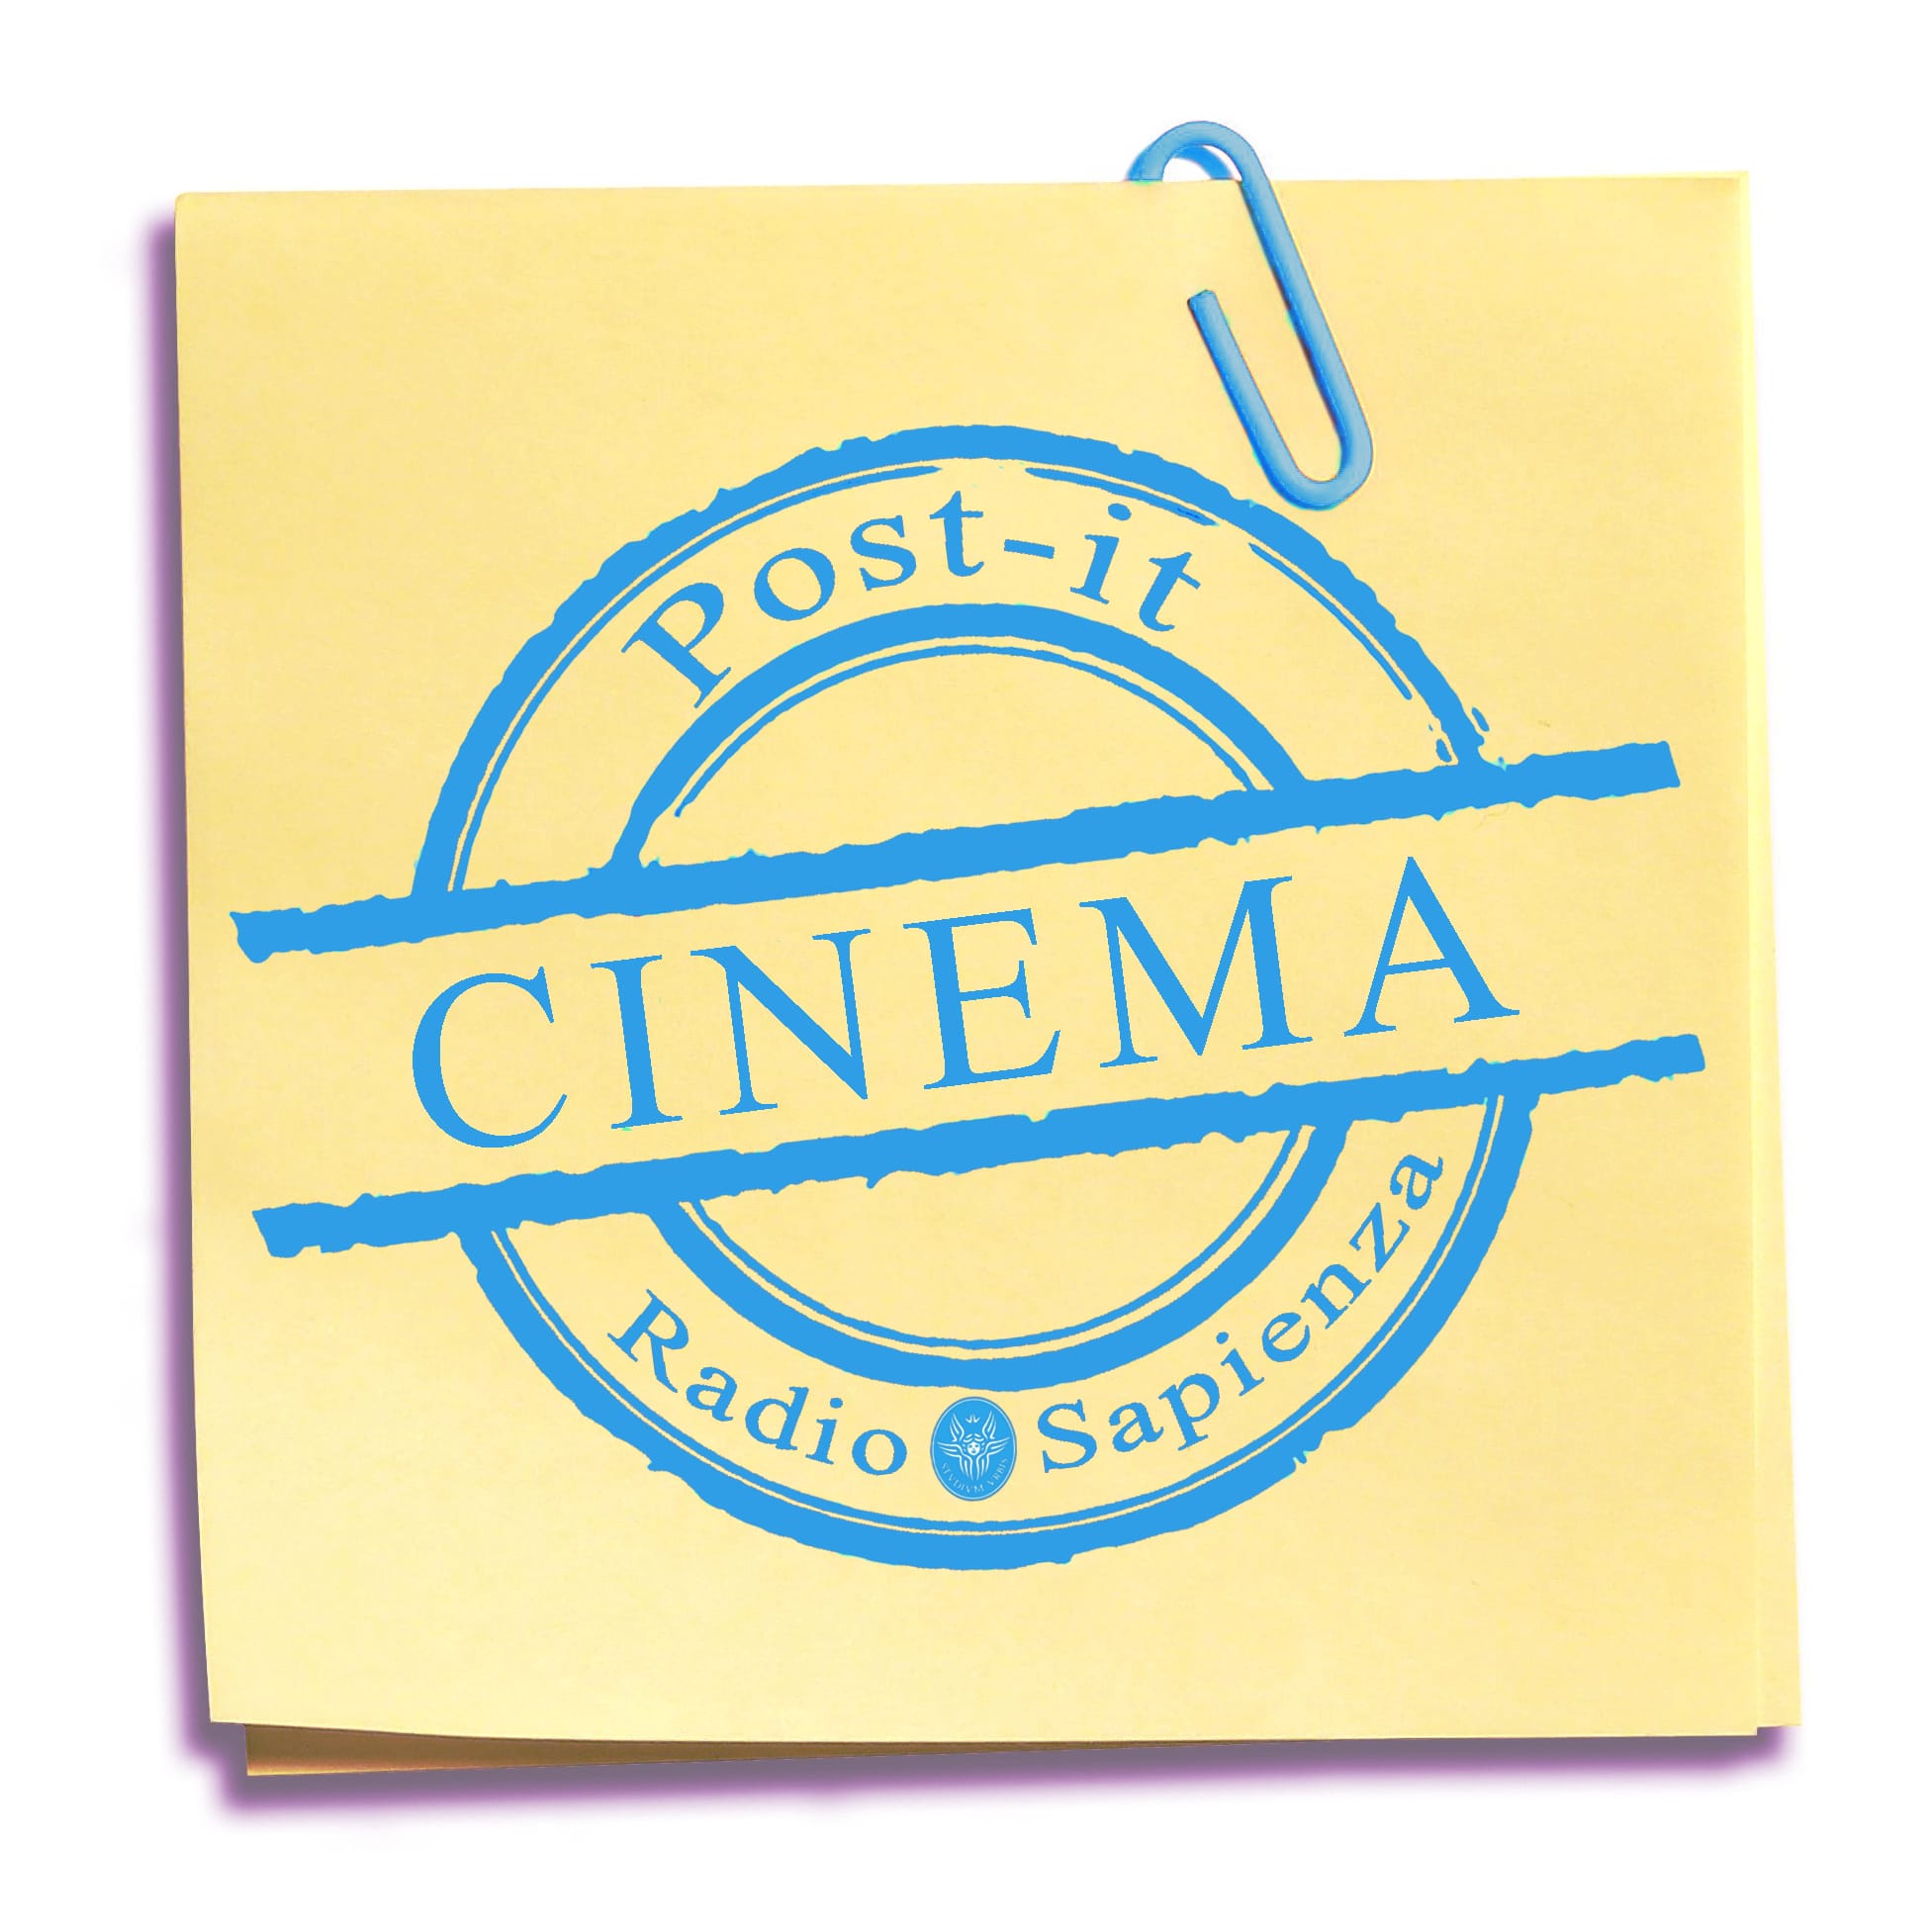 Post-it Cinema – mercoledì 4 maggio